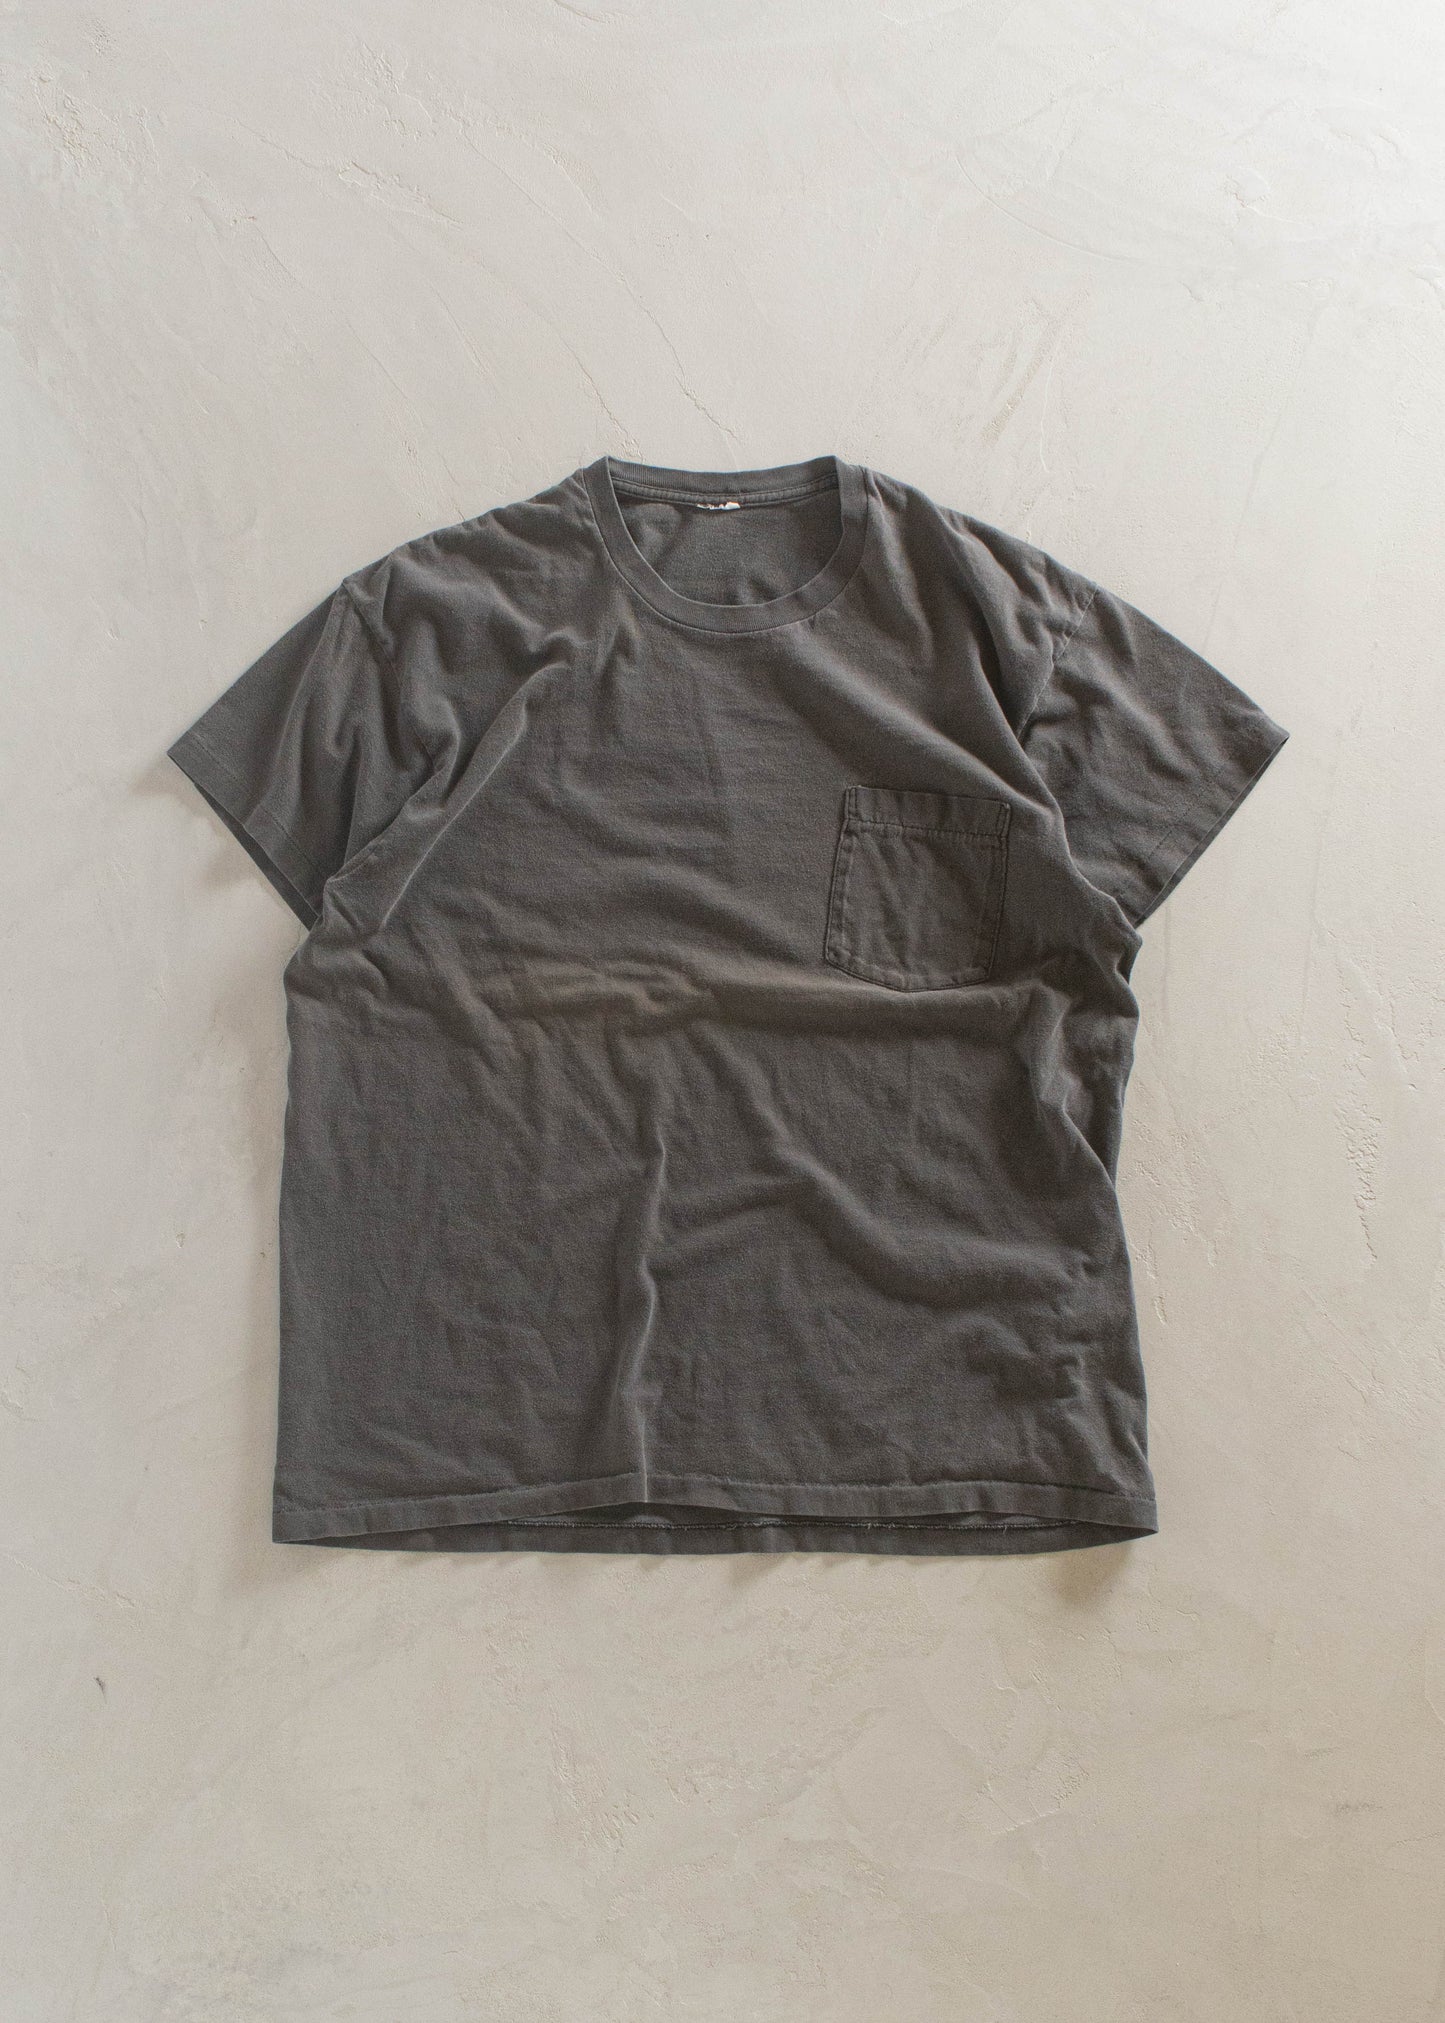 1980s Selvedge Pocket T-Shirt Size L/XL